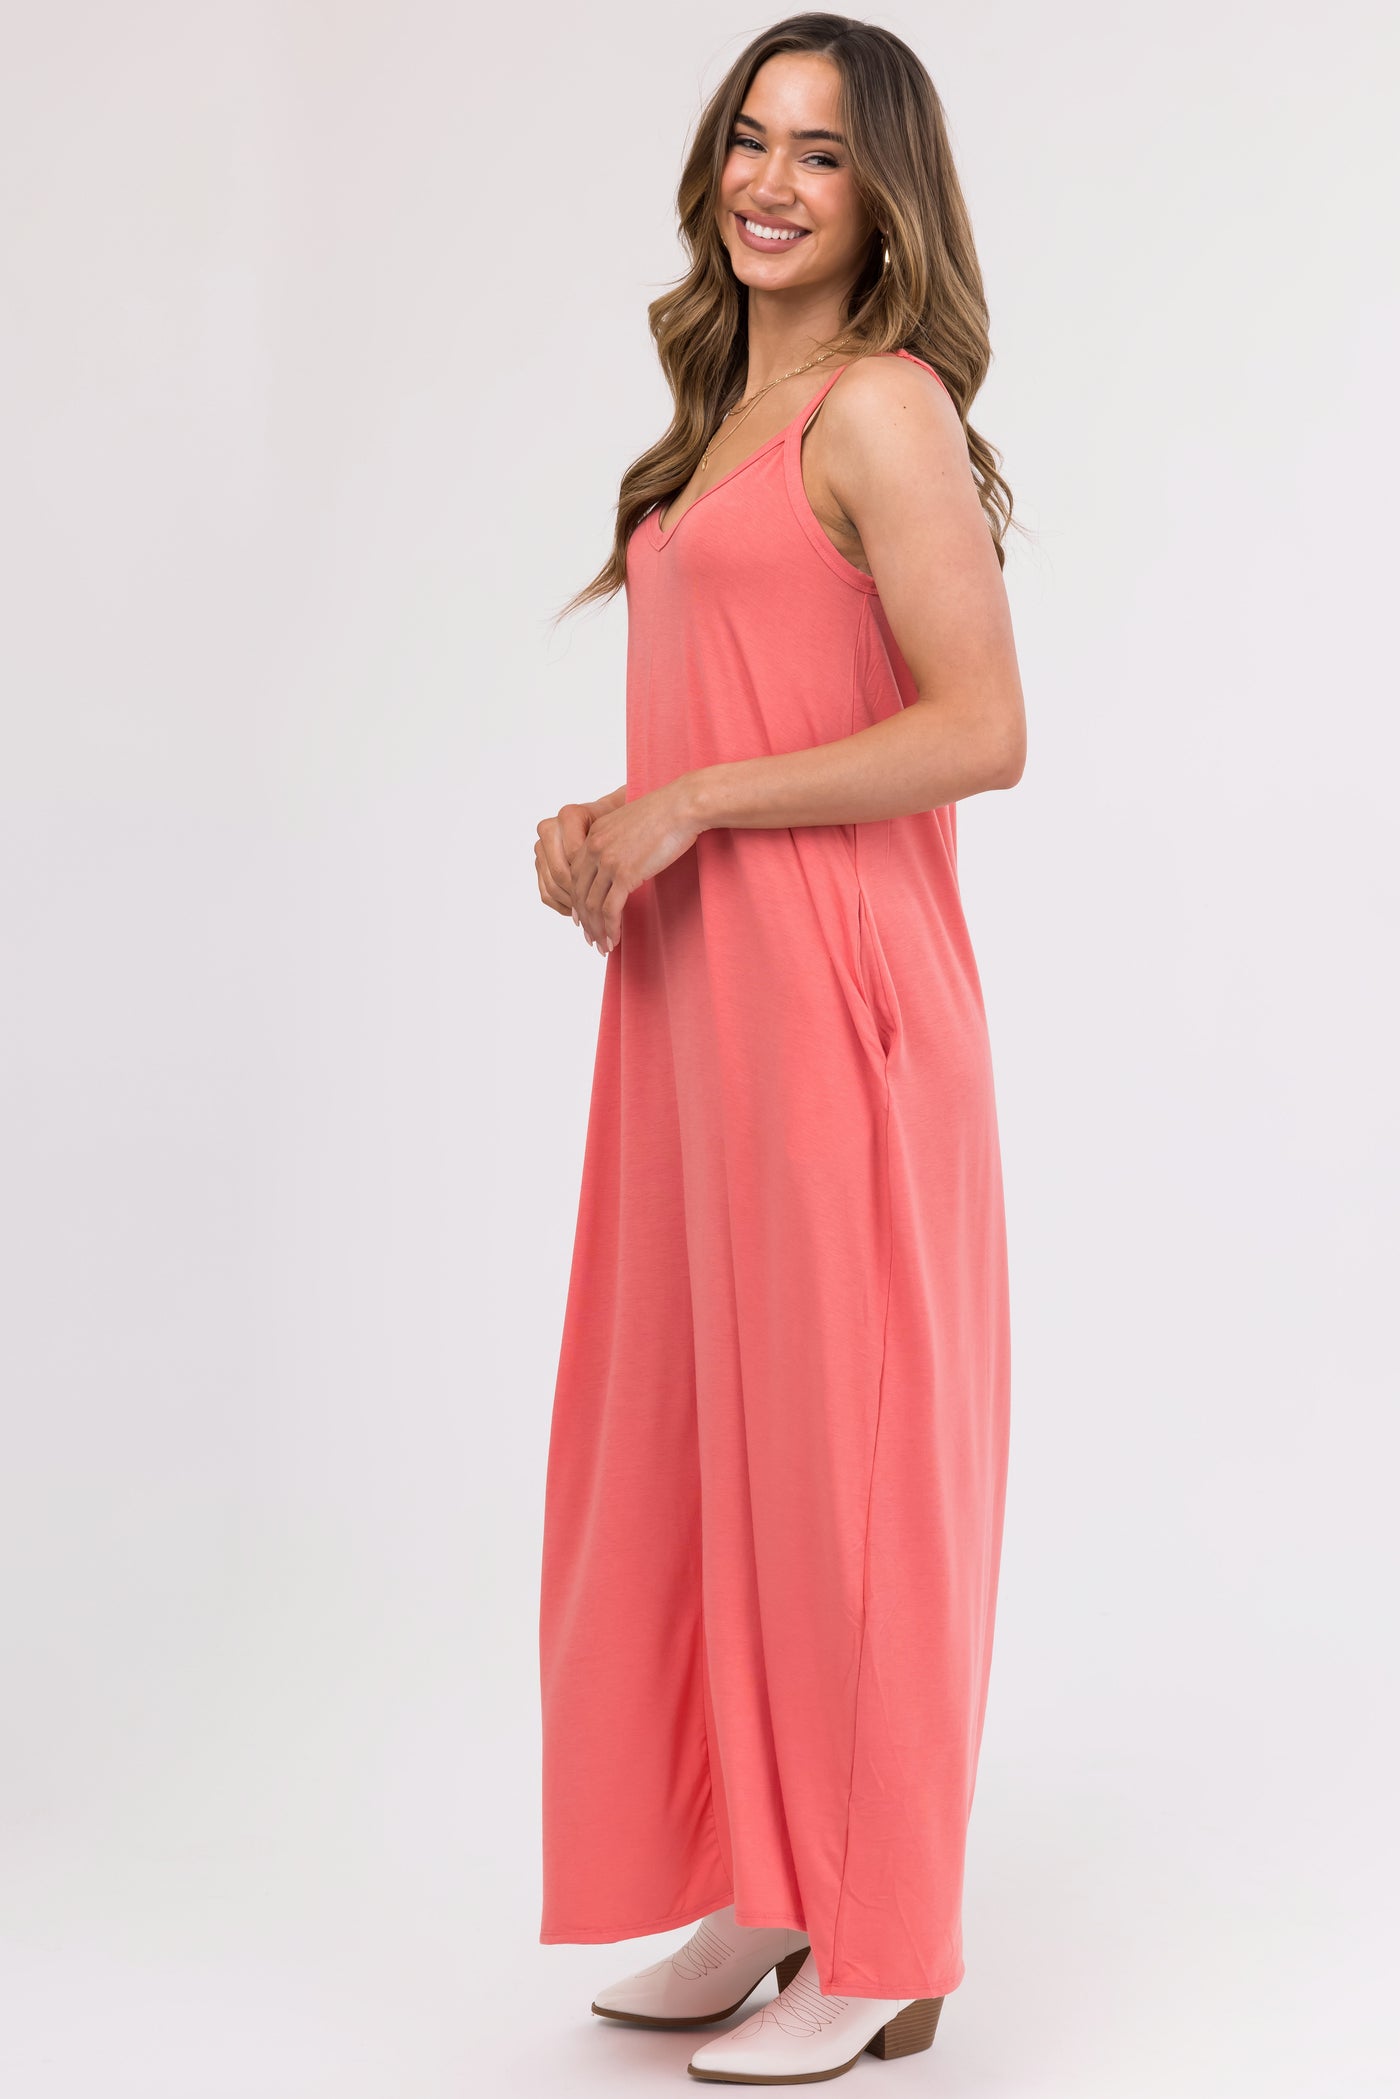 Coral Sleeveless Knit Maxi Dress with Pockets